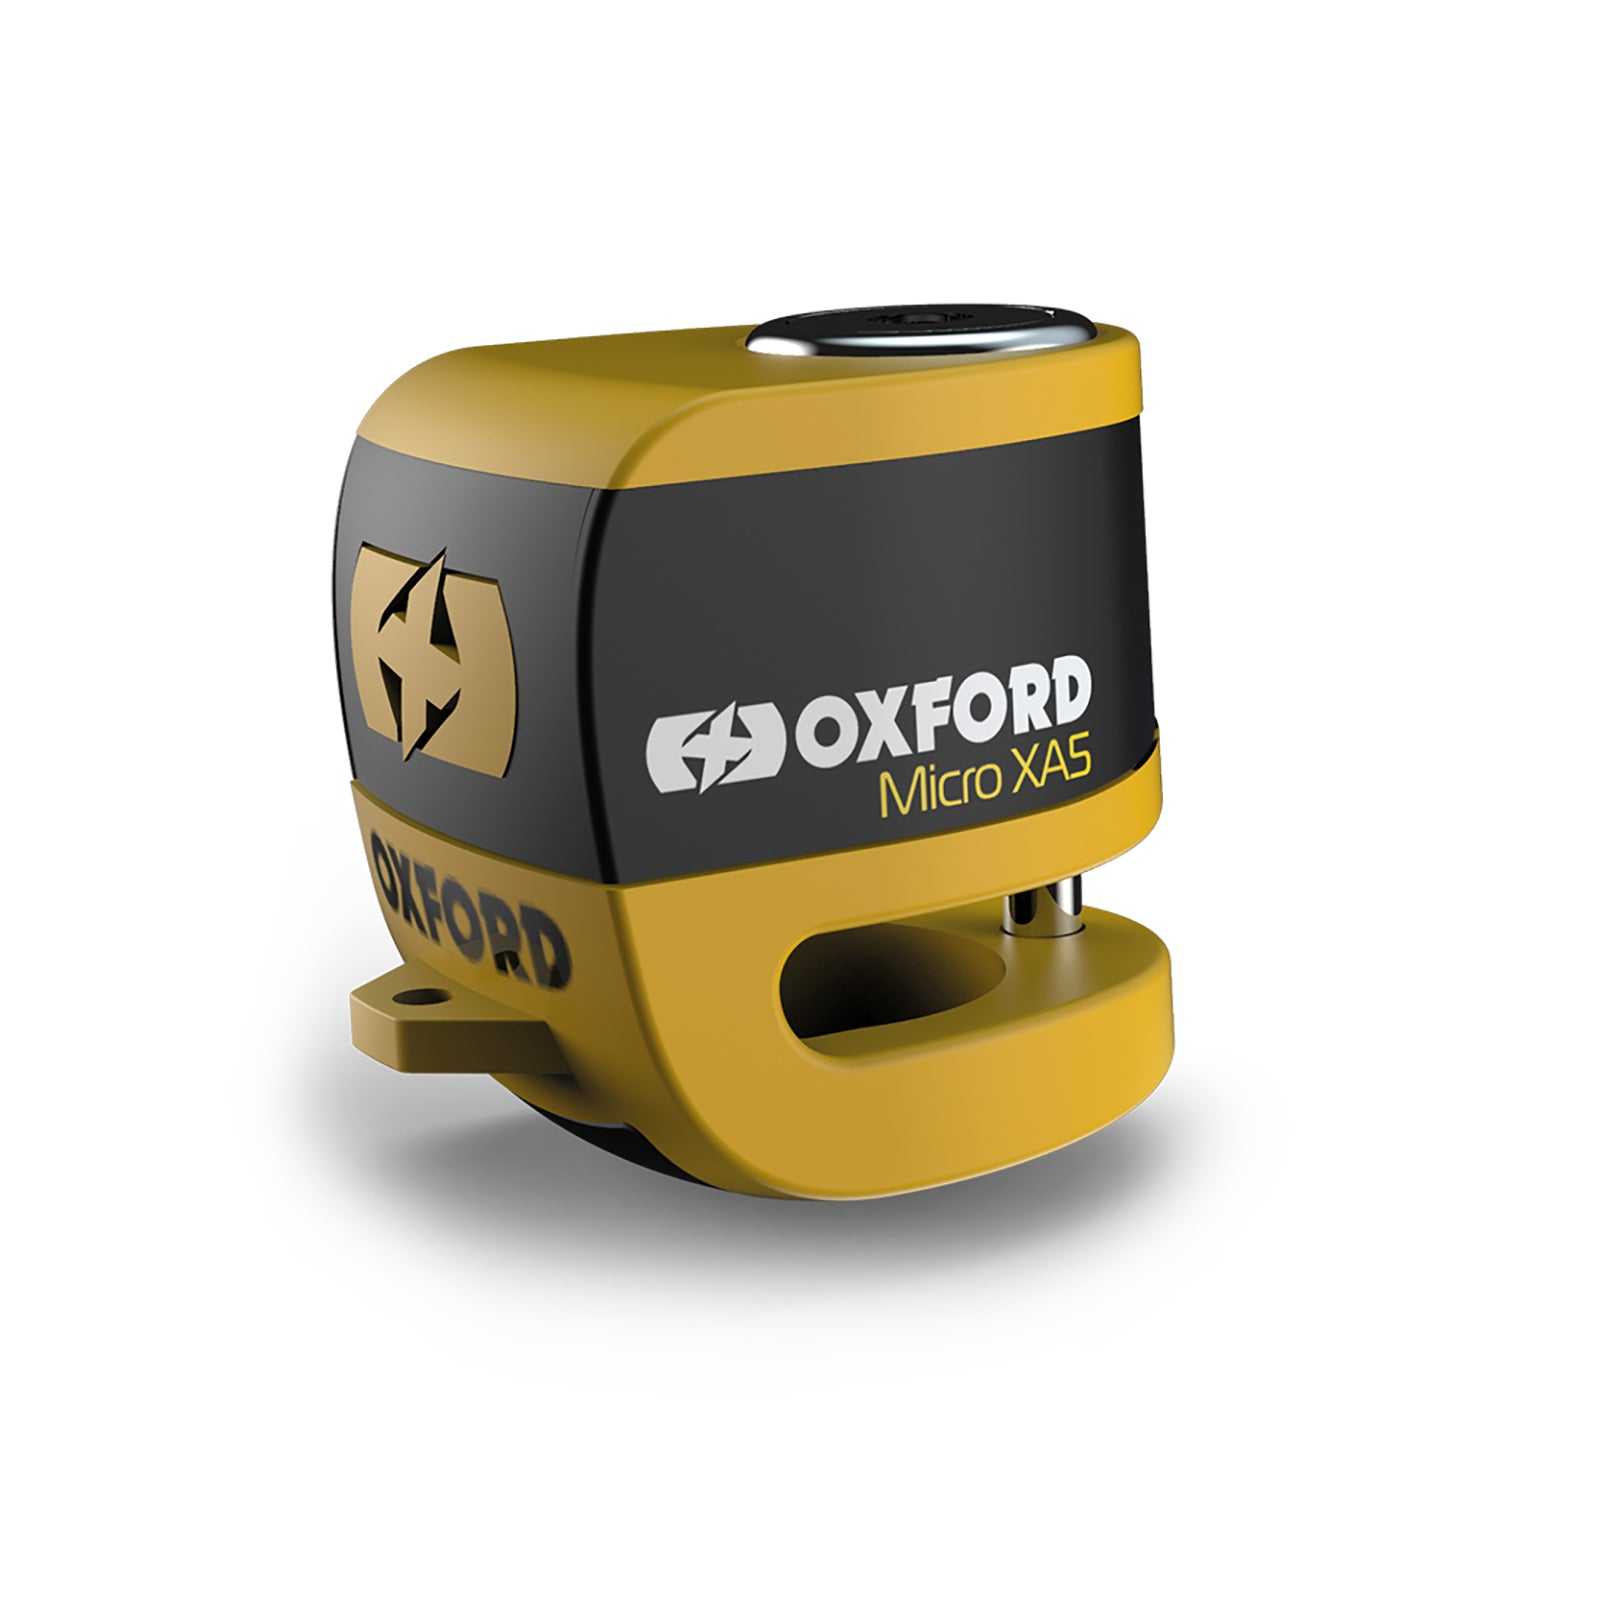 Oxford, Oxford Disc Lock Alarm Micro XA5 - Black / Yellow